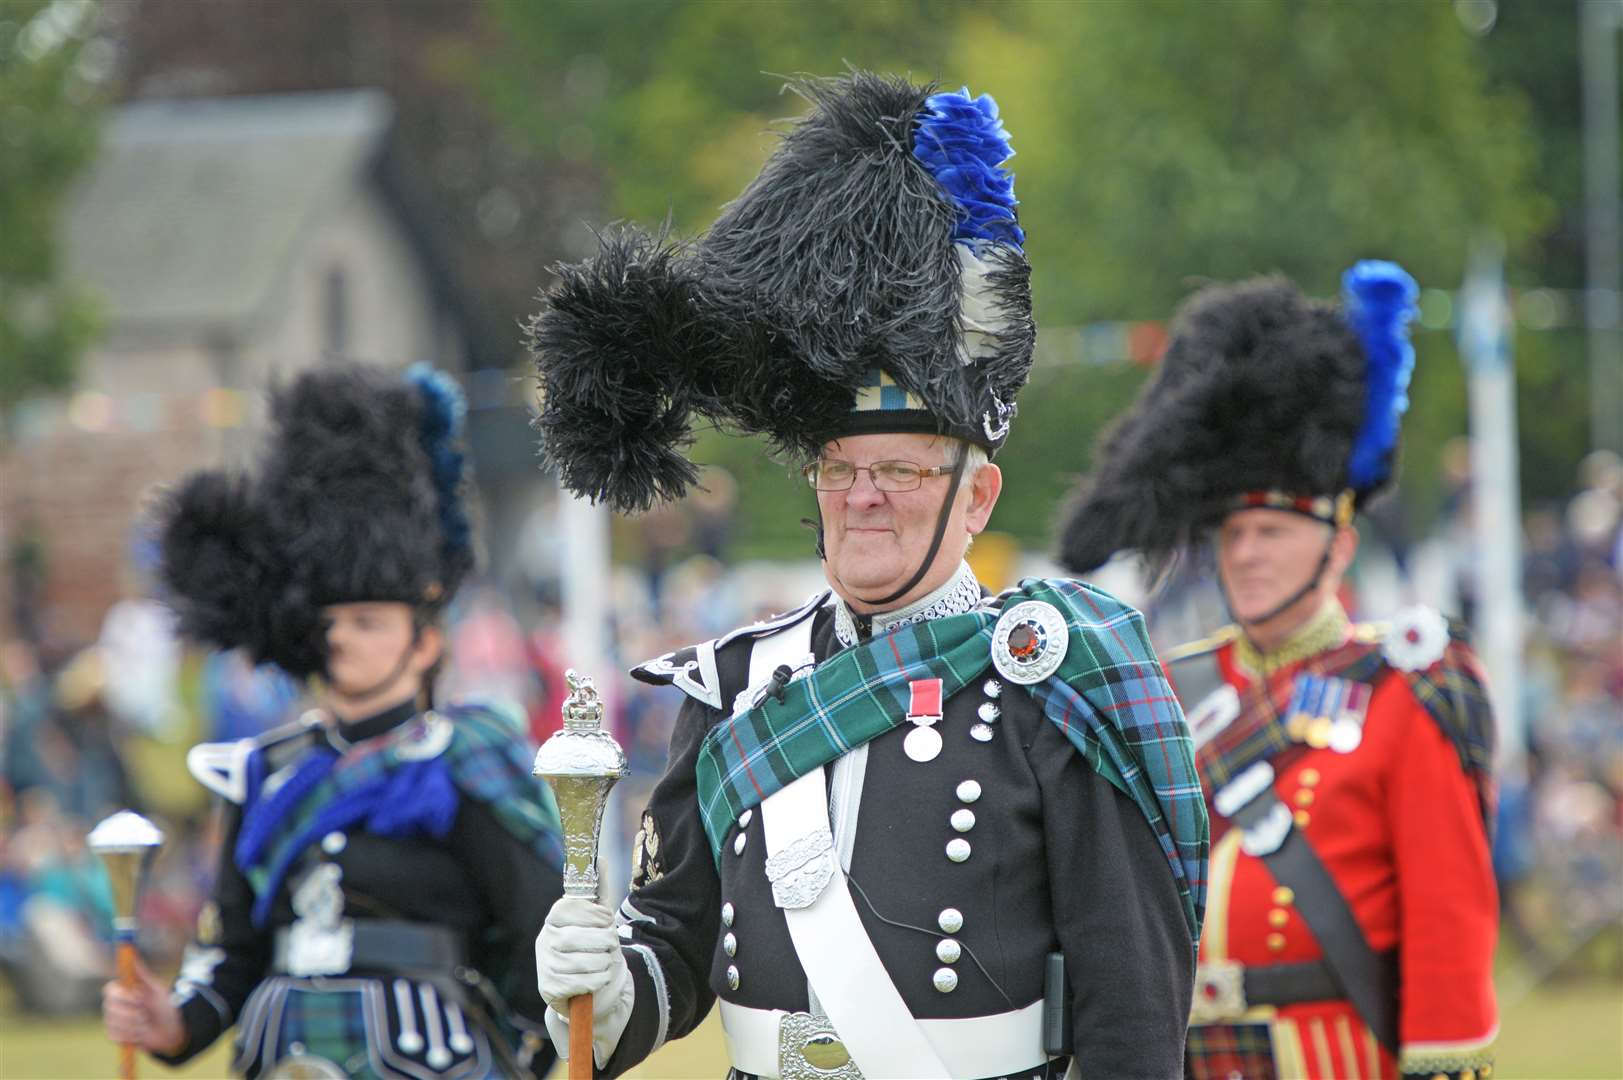 The Nairn Royal Brackla Highland Games in 2018.